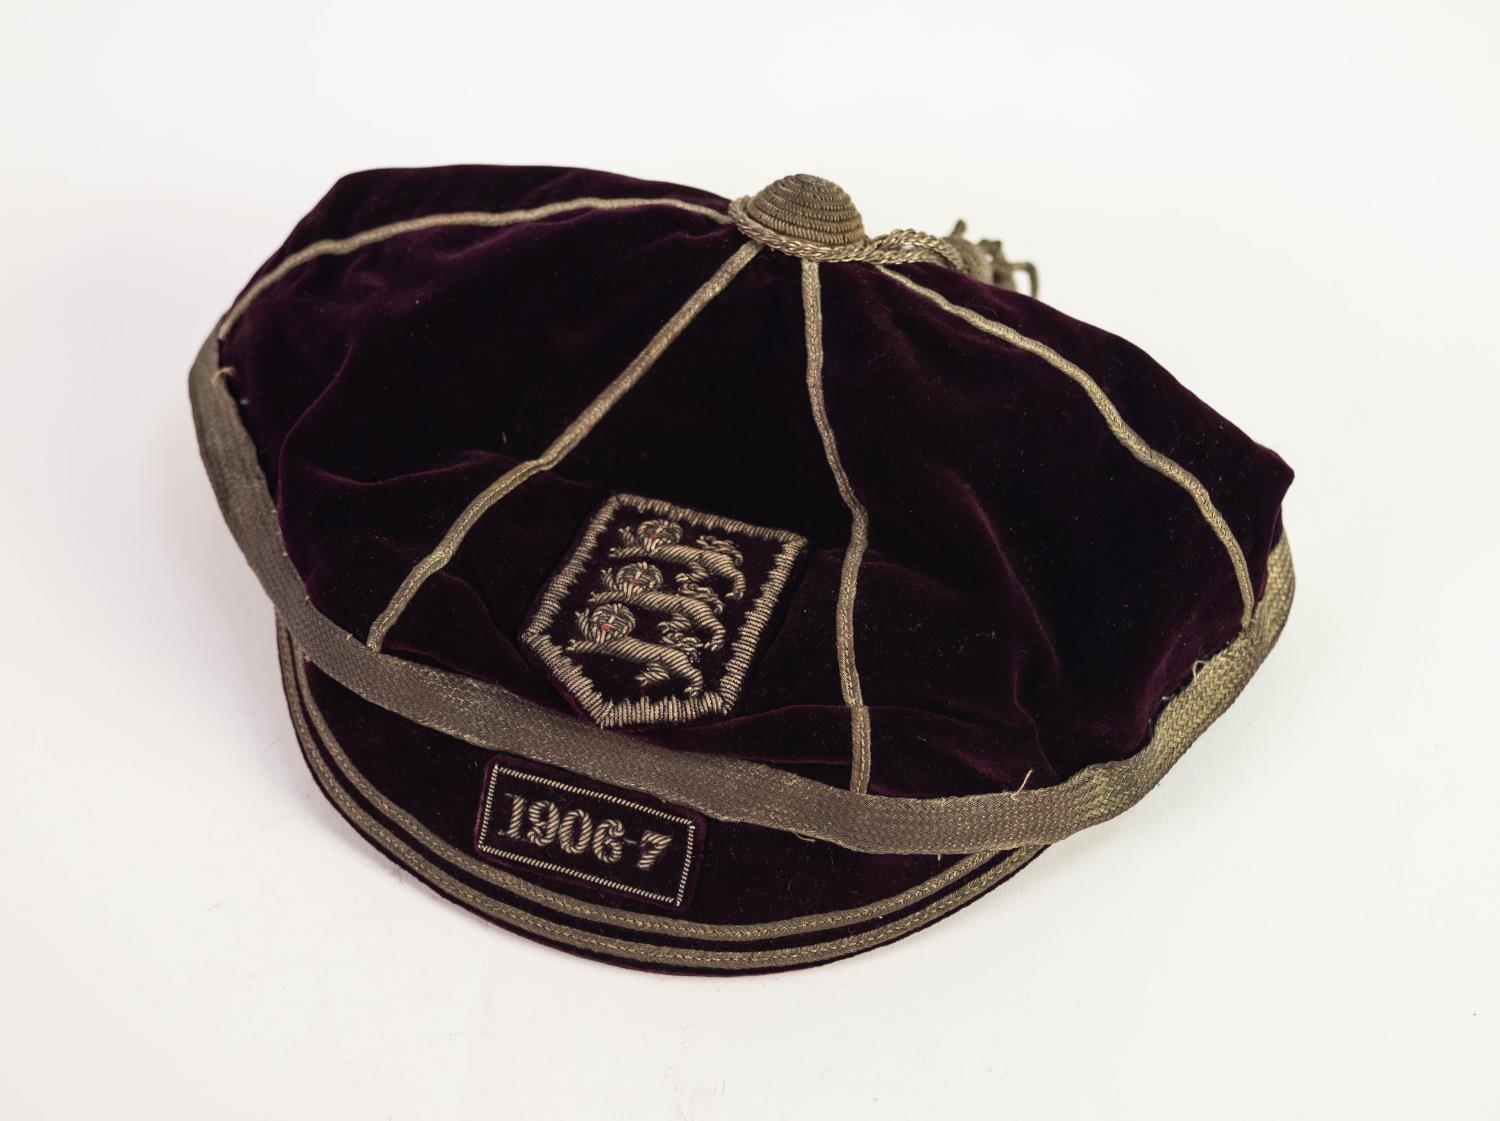 ENGLAND INTERNATIONAL FOOTBALL CAP 1906-7, deep purple velvet with silver braid and tassel with